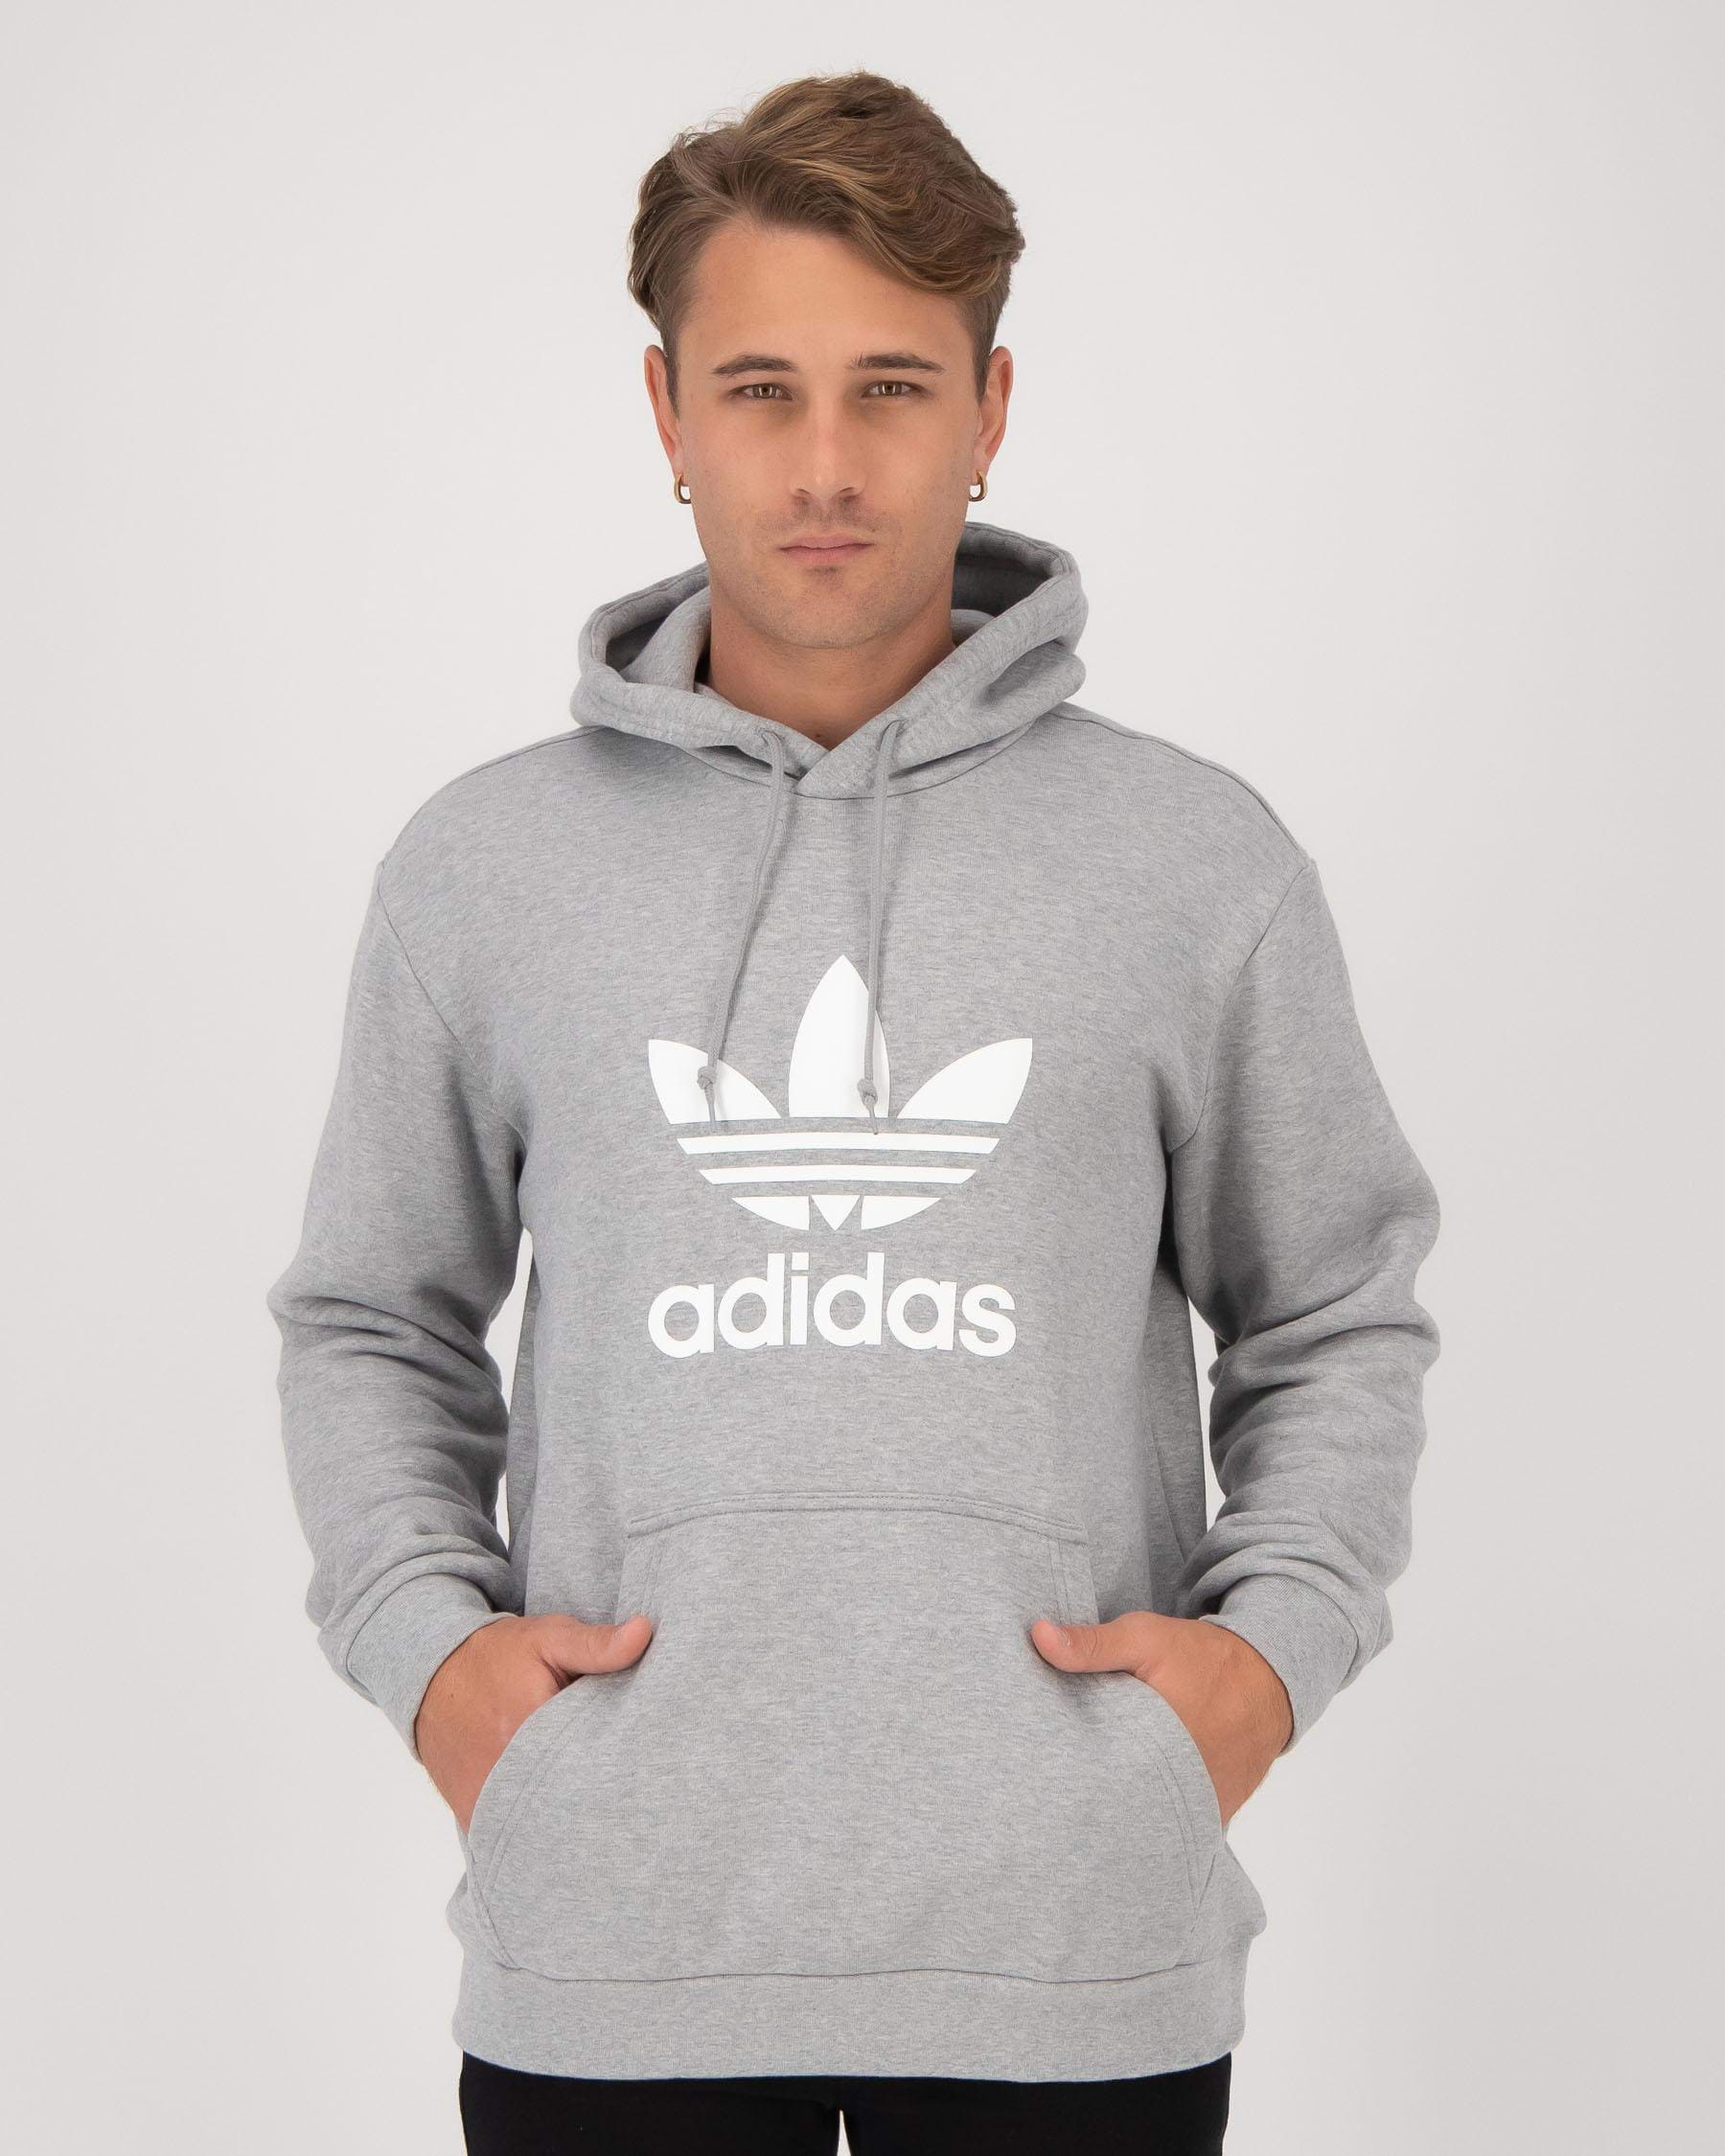 Adidas Trefoil Hoodie In Medium Grey Heather | City Beach United States